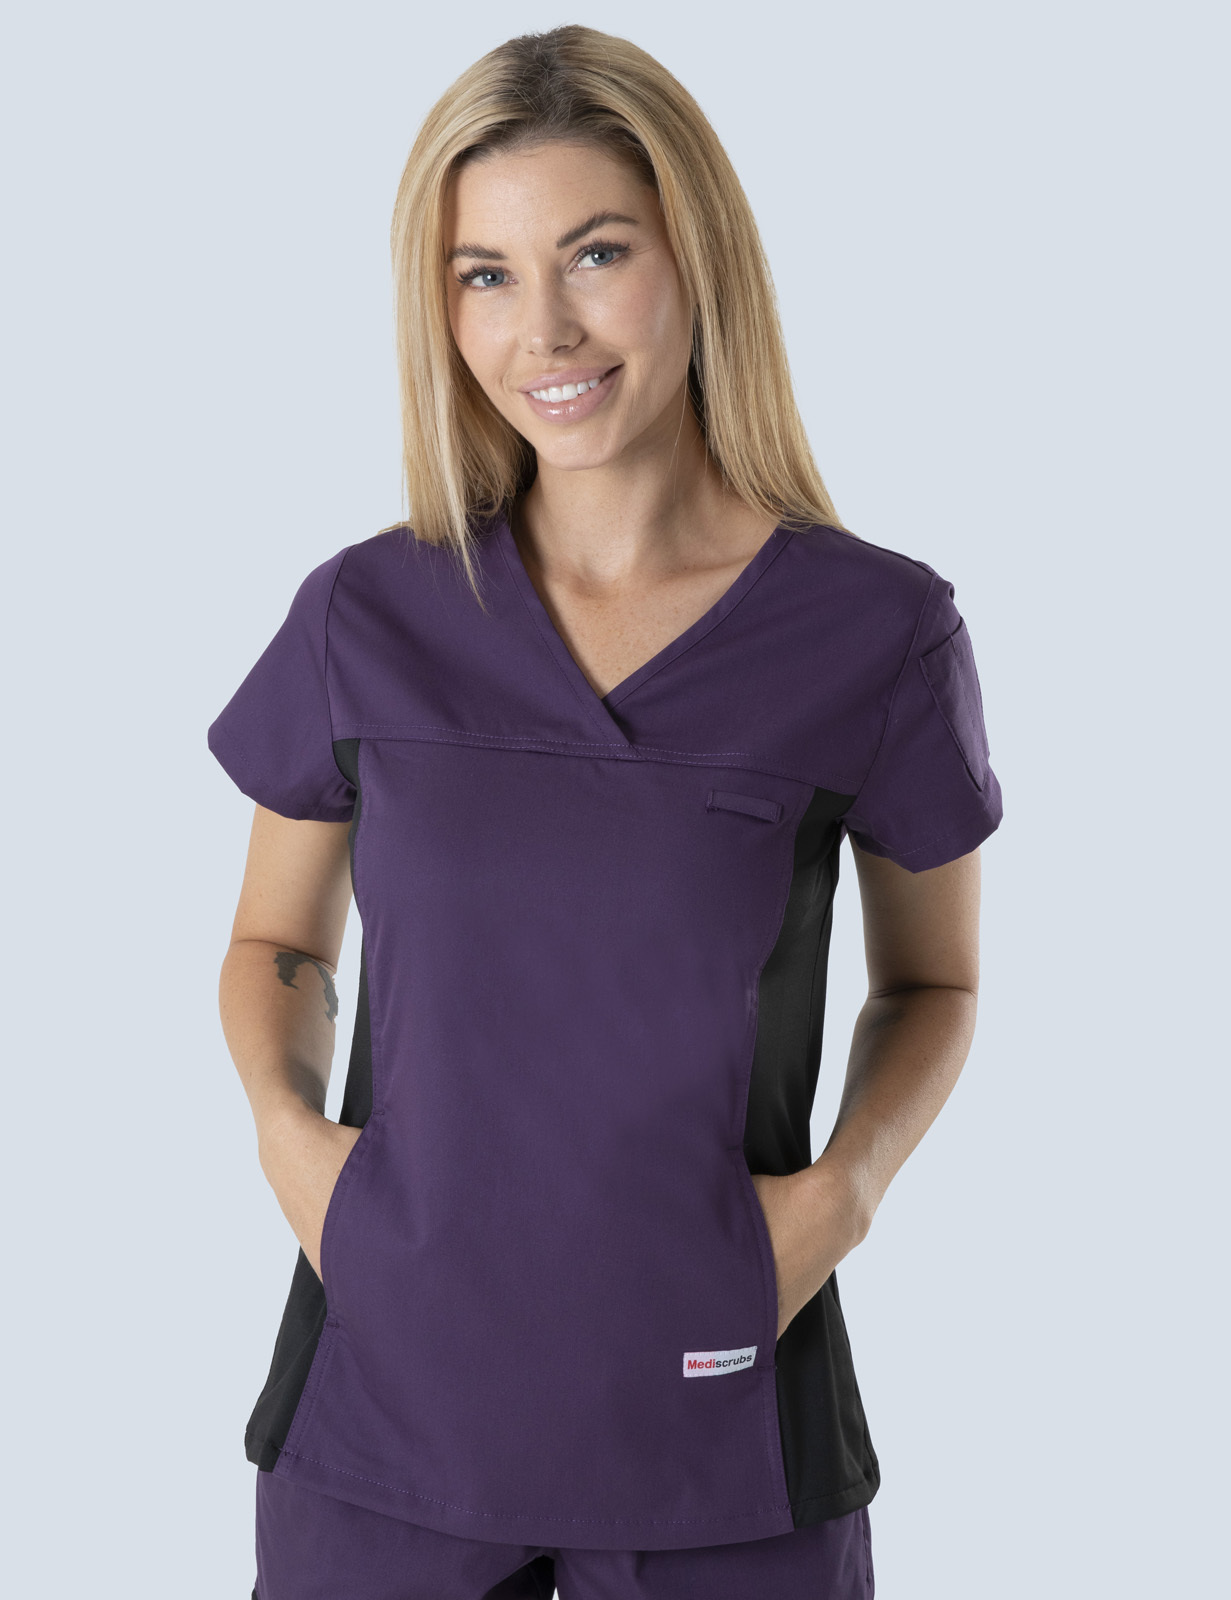 Ashmore Retreat Registered Nurse Top Only Bundle (Women's Fit Spandex in Aubergine incl Logo) 